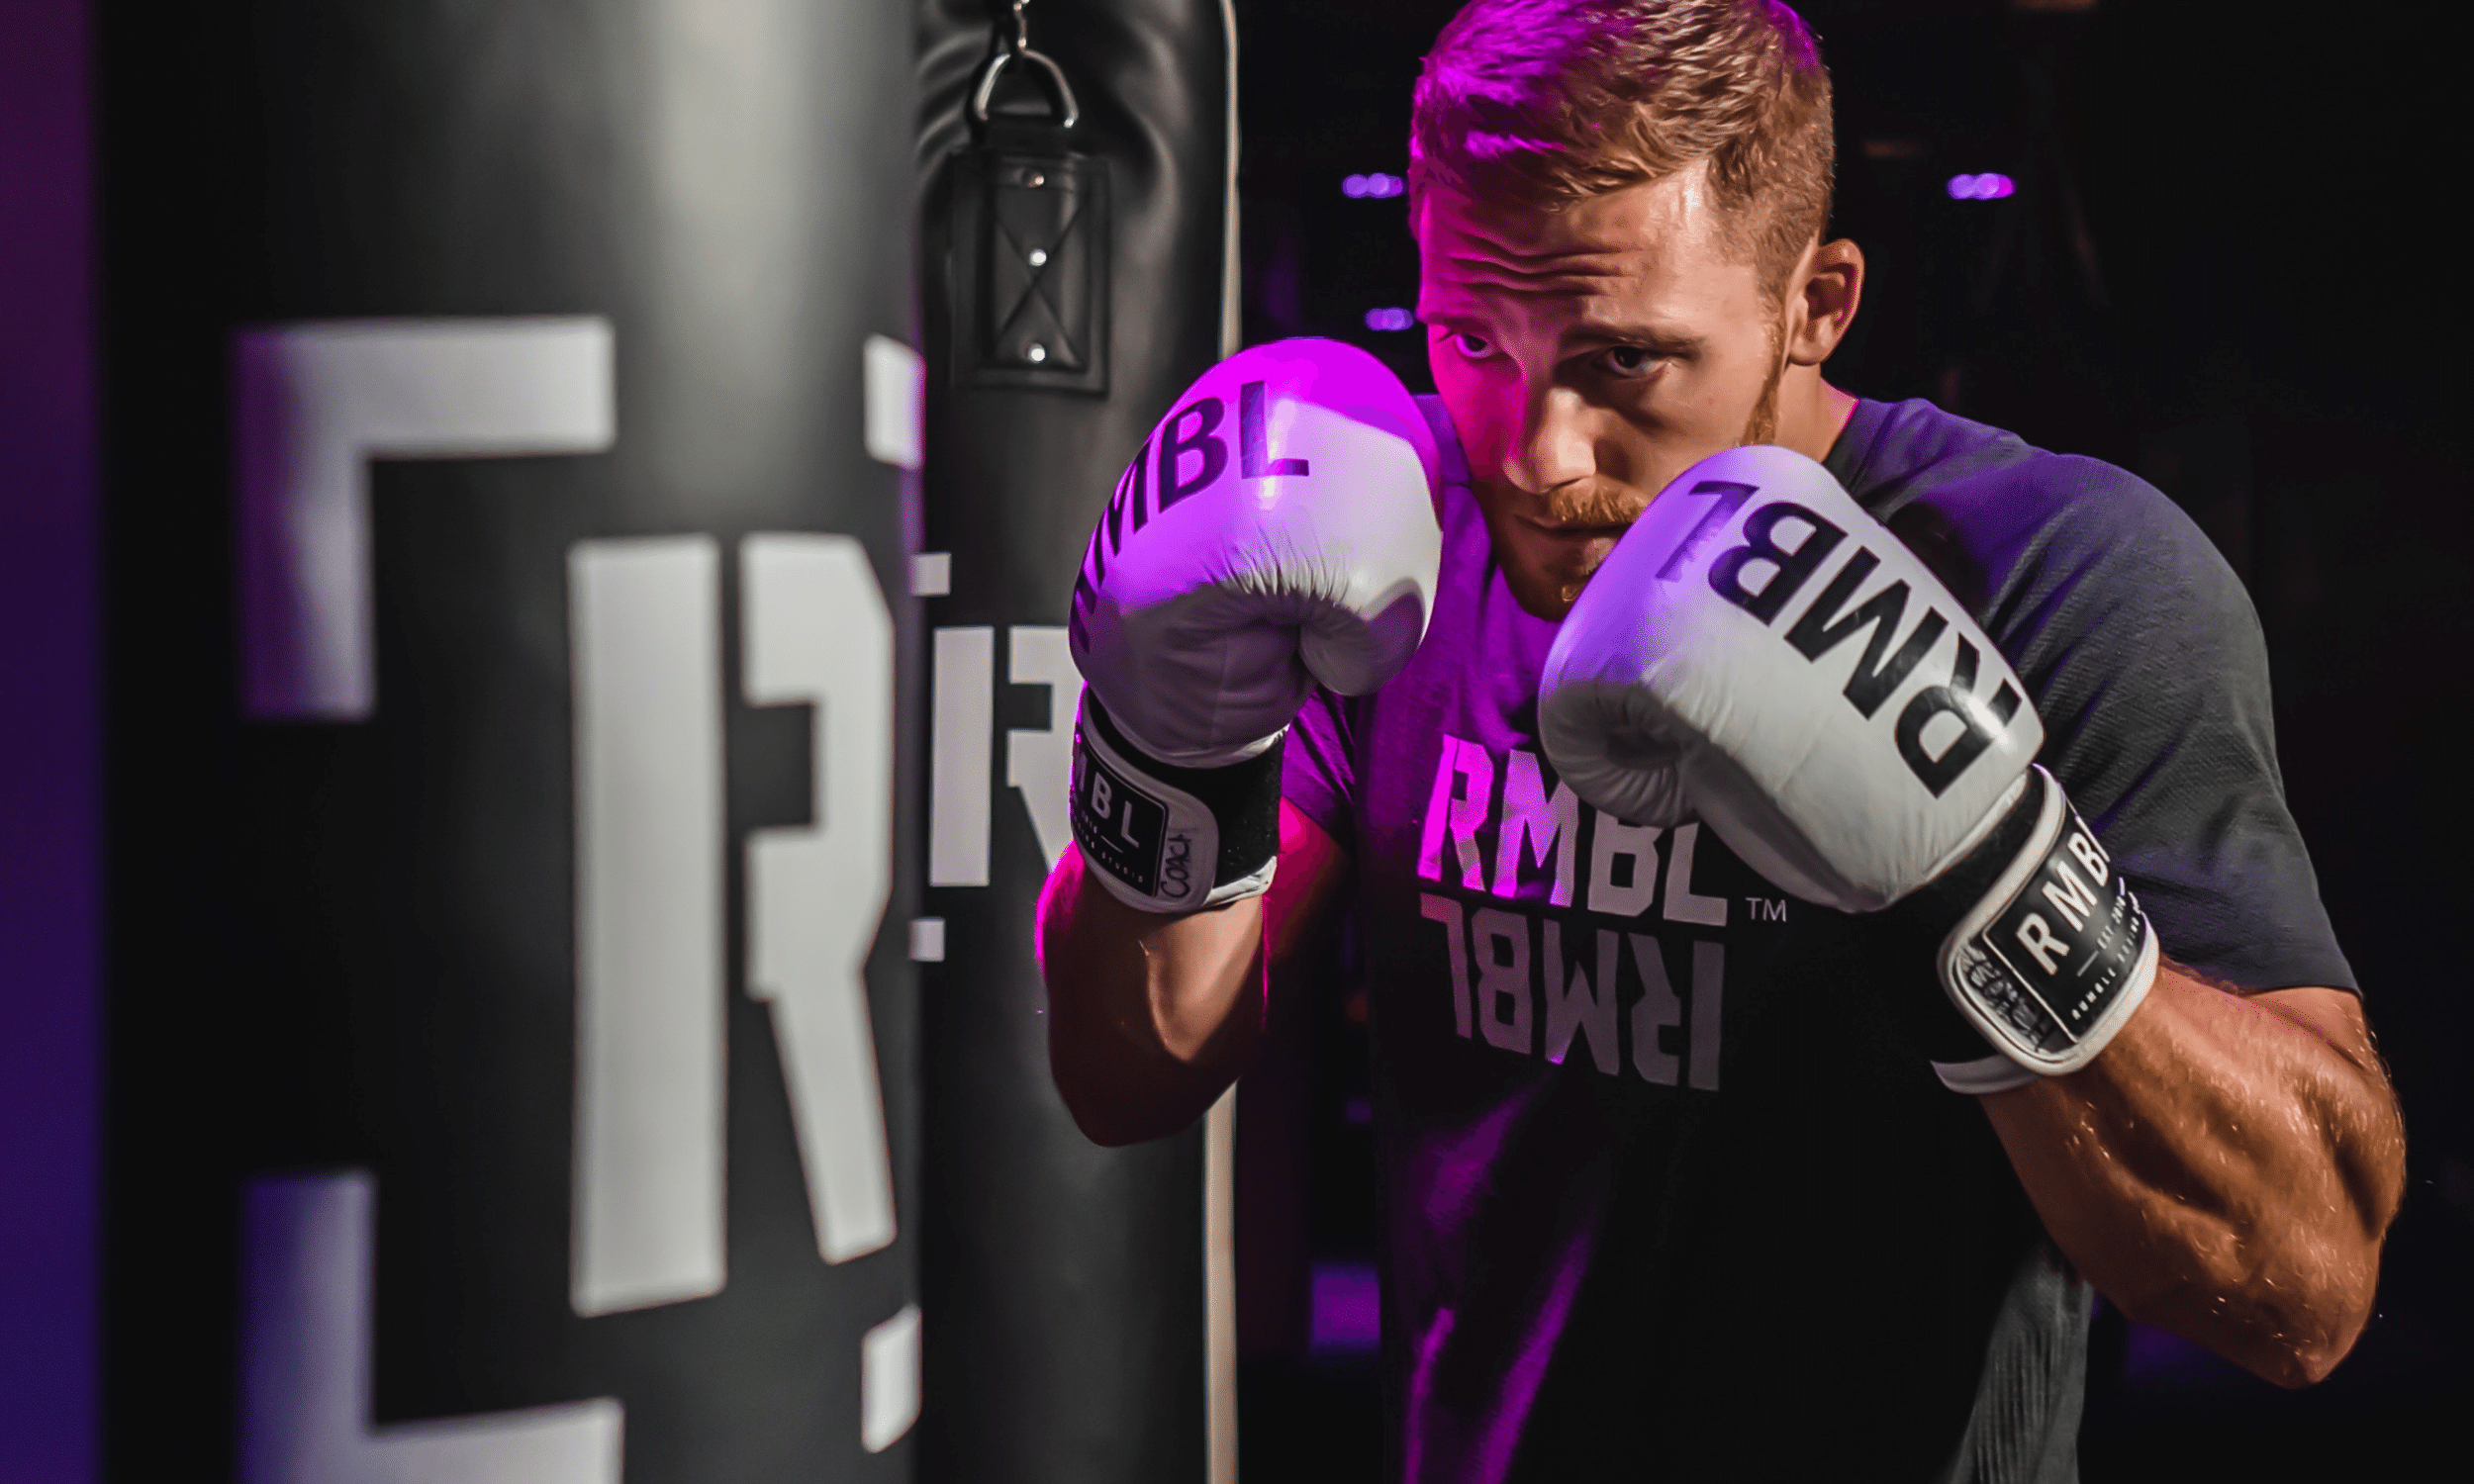 Rumble Boxing Studio Review: This Ain't No Shadow Boxing Class - FLEETSTREET